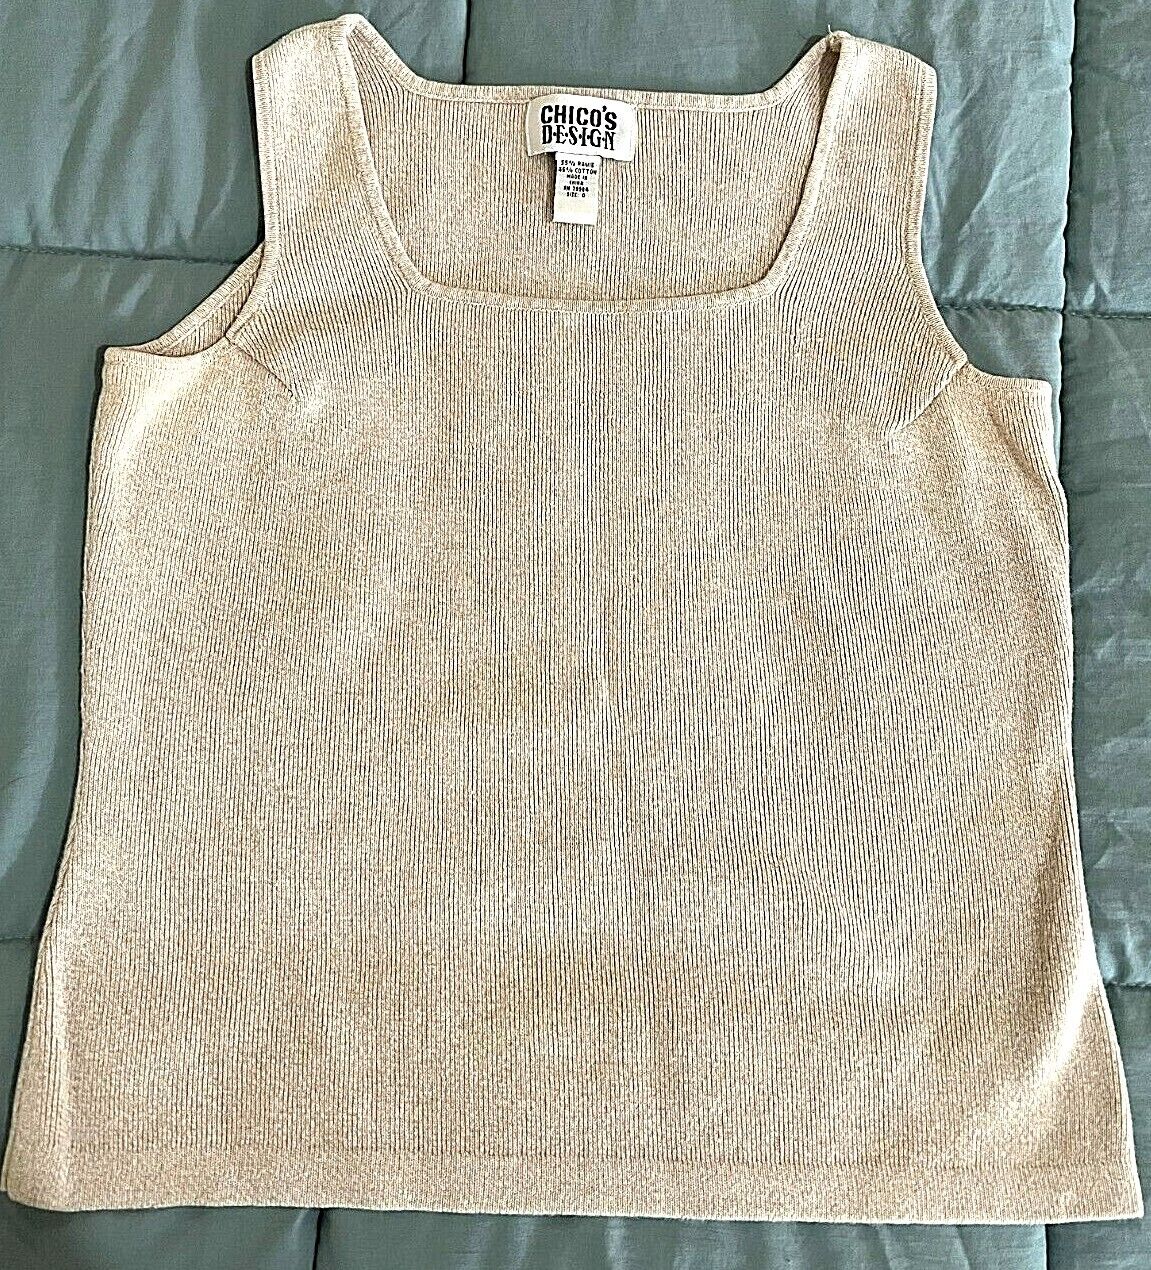 Chico's Sleeveless Top Beige Sweater Size 0 (XS) | eBay